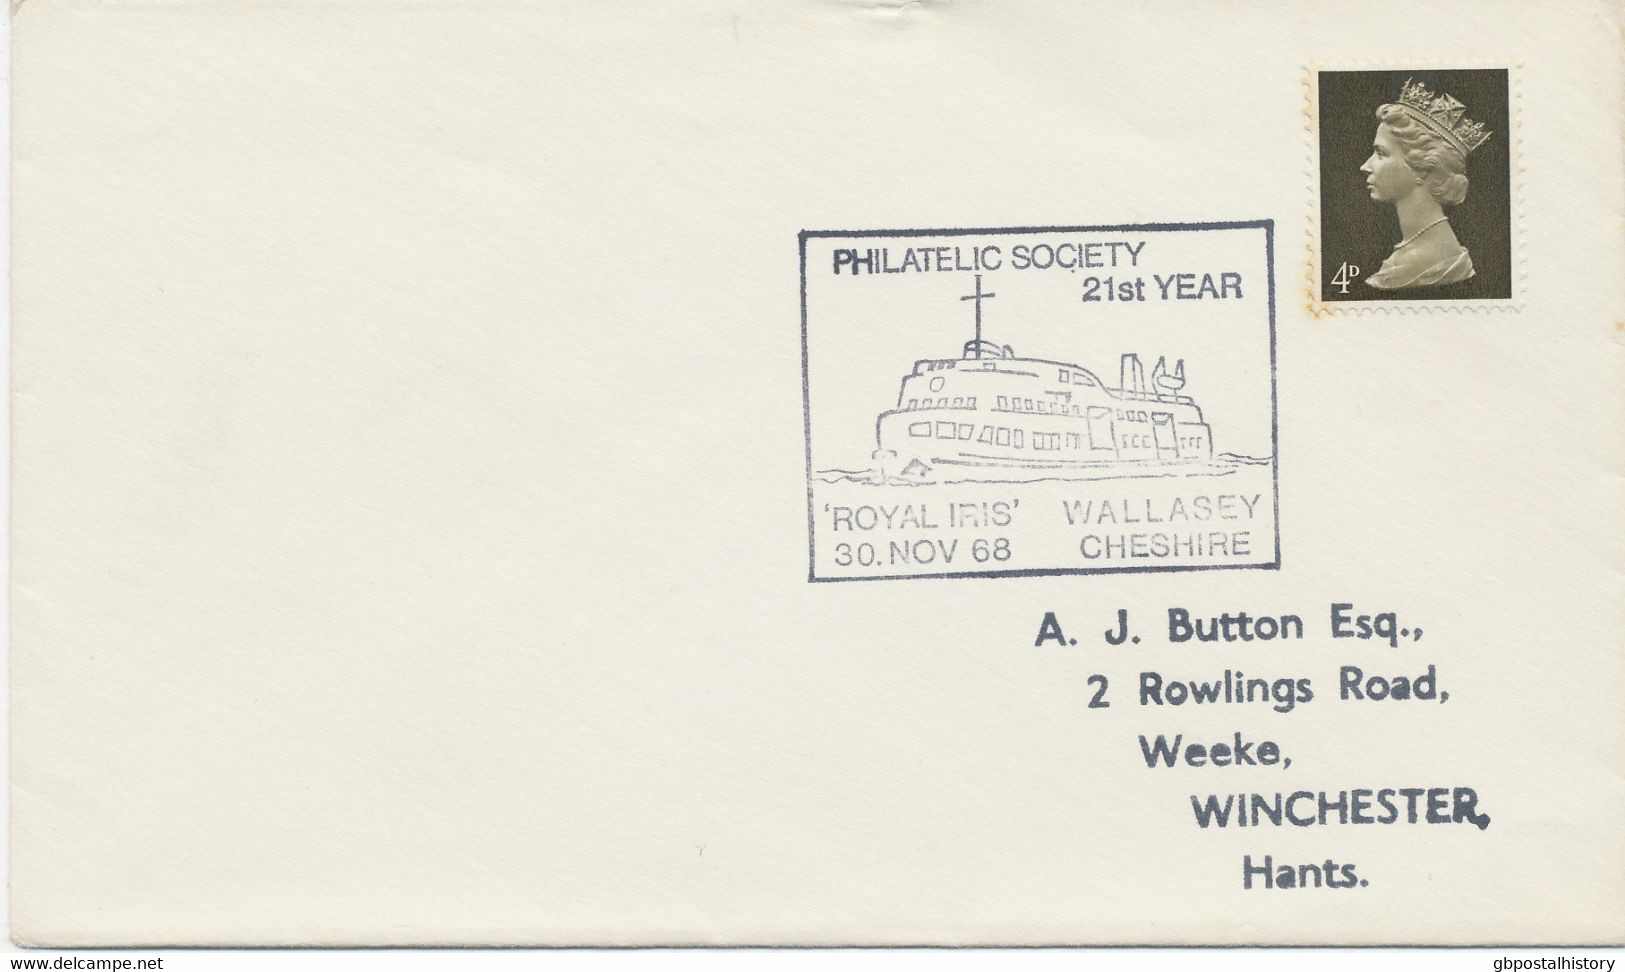 GB SPECIAL EVENT POSTMARKS PHILATELY 1968 Philatelic Society 21st Year 'Royal Iris' Wallasey Cheshire - Cartas & Documentos